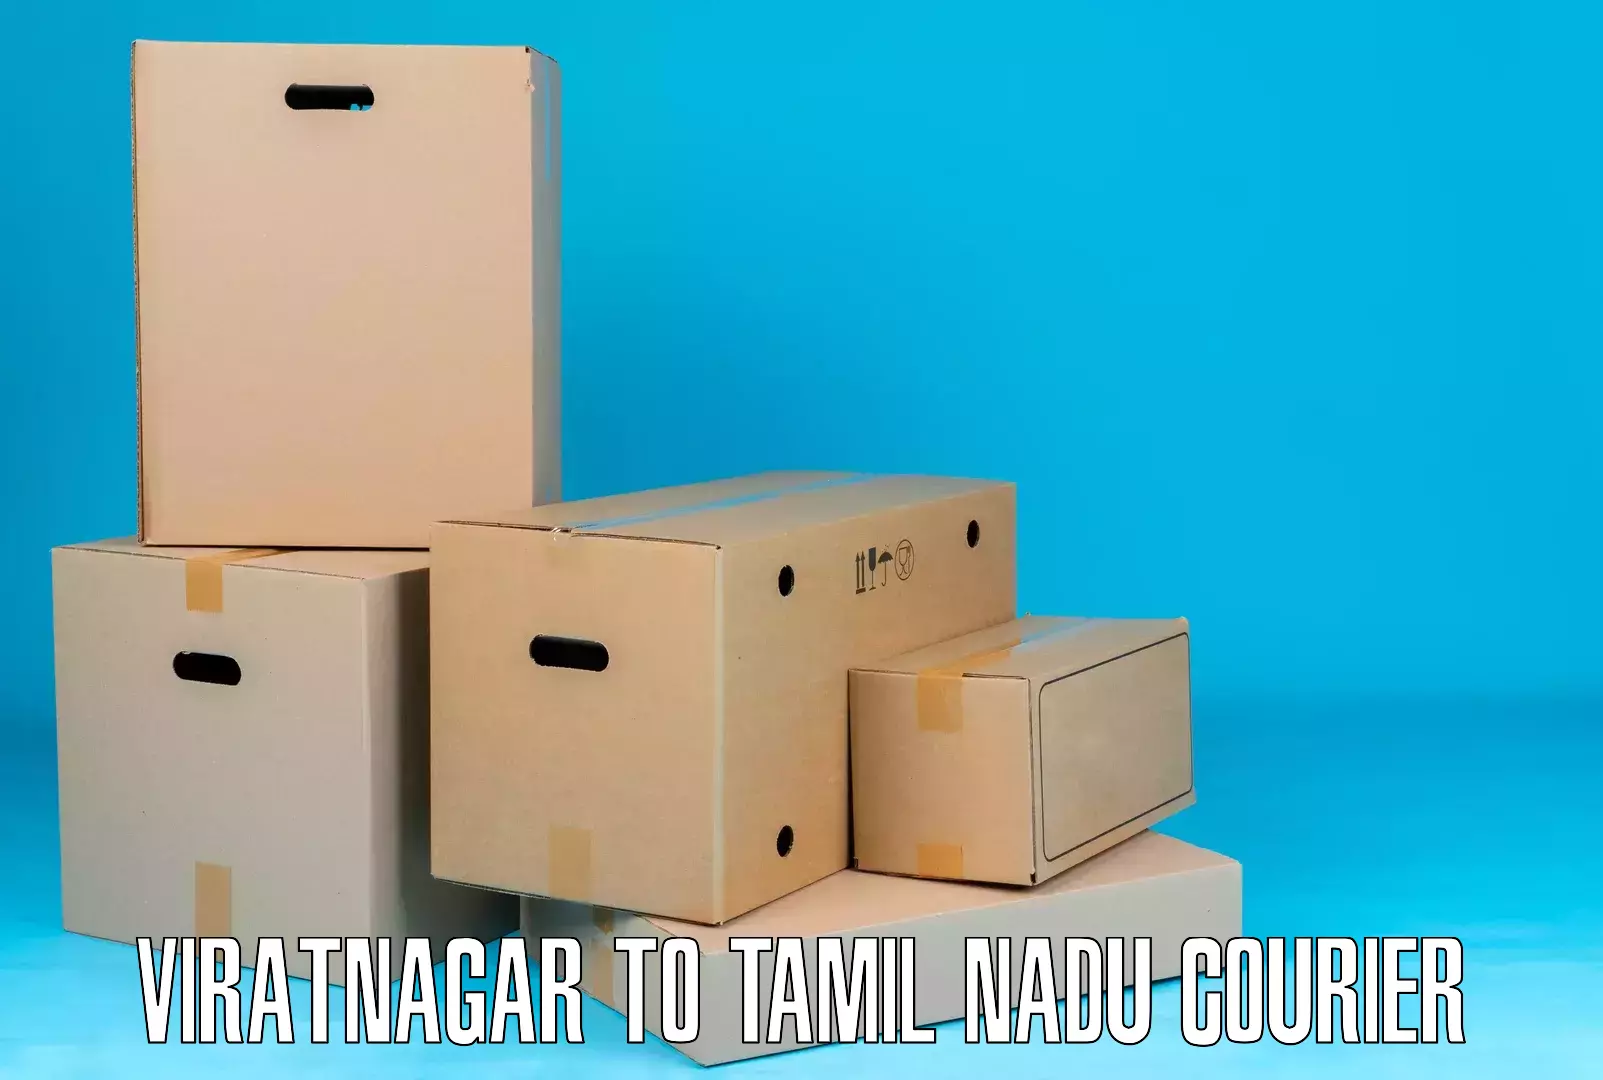 Large-scale shipping solutions Viratnagar to Tamil Nadu